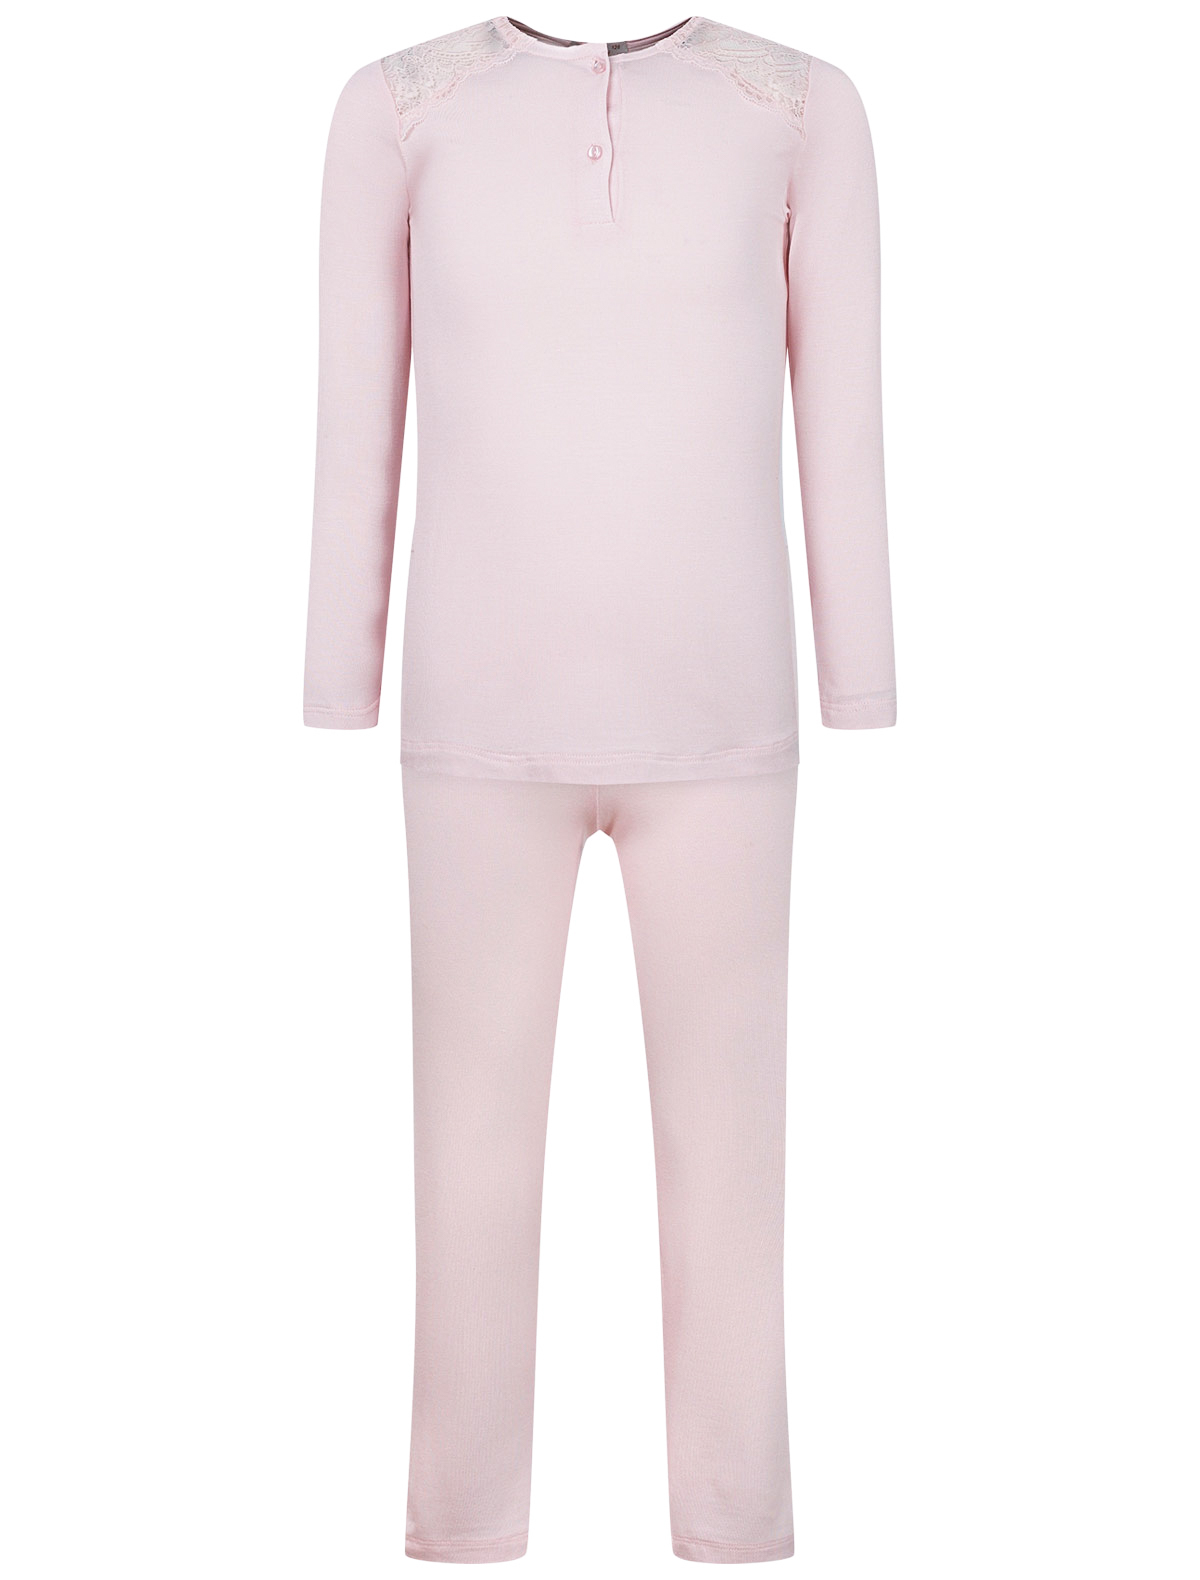 Пижама Sognatori розового цвета